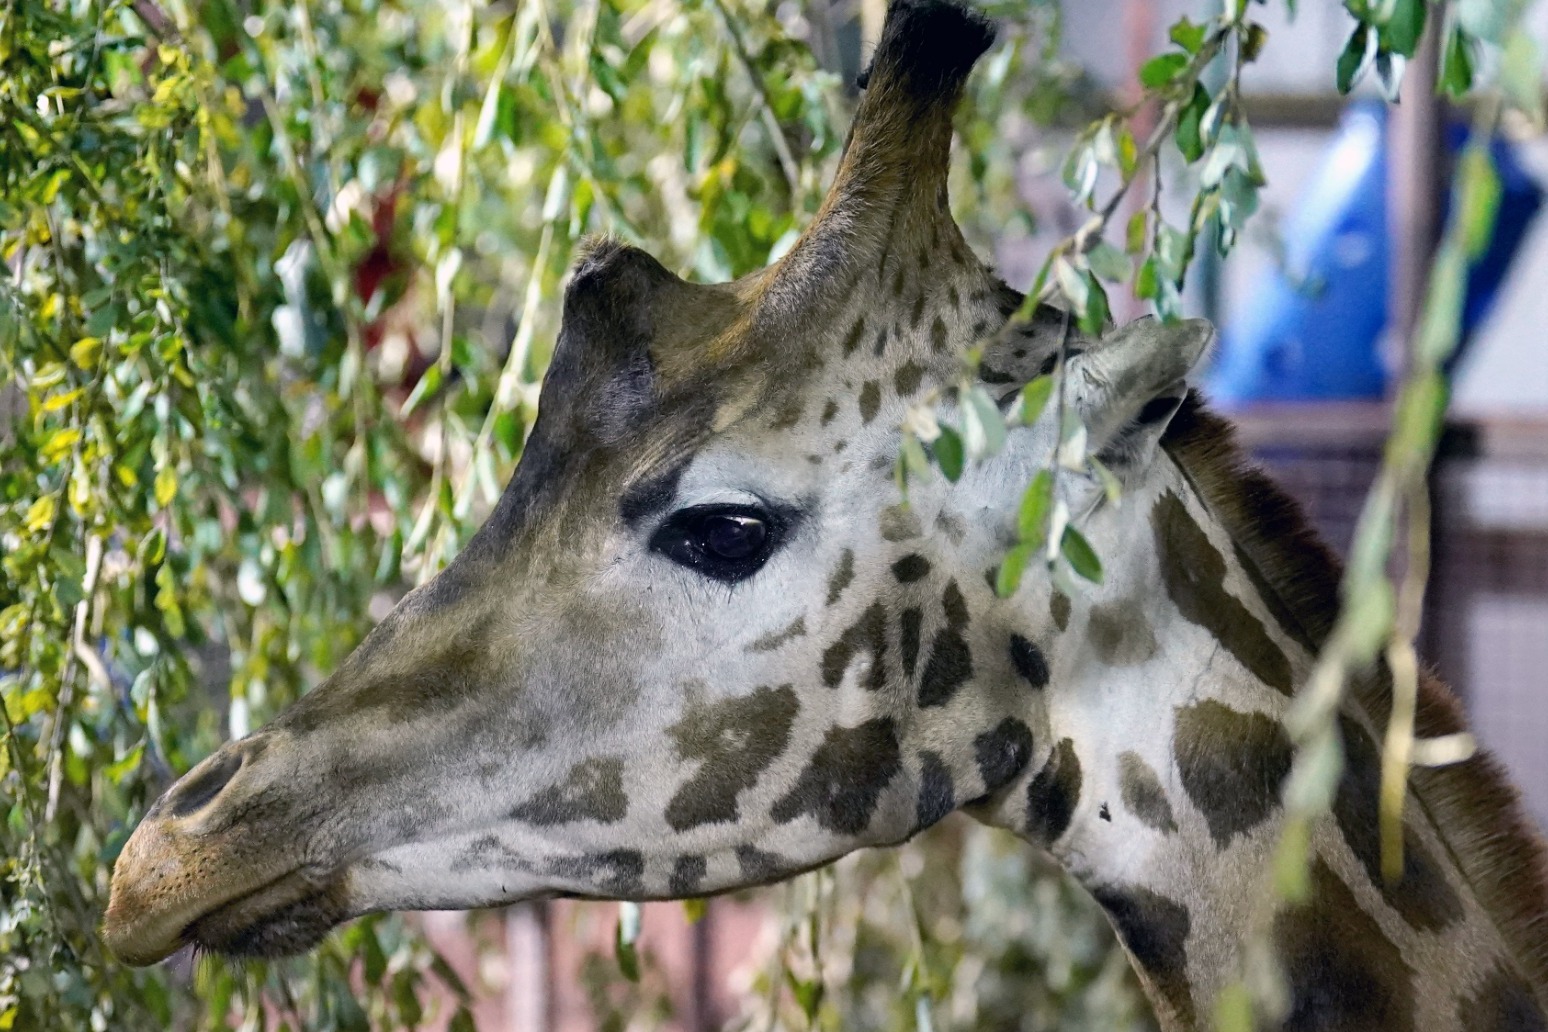 Endangered male giraffe Sifa arrives at safari park 